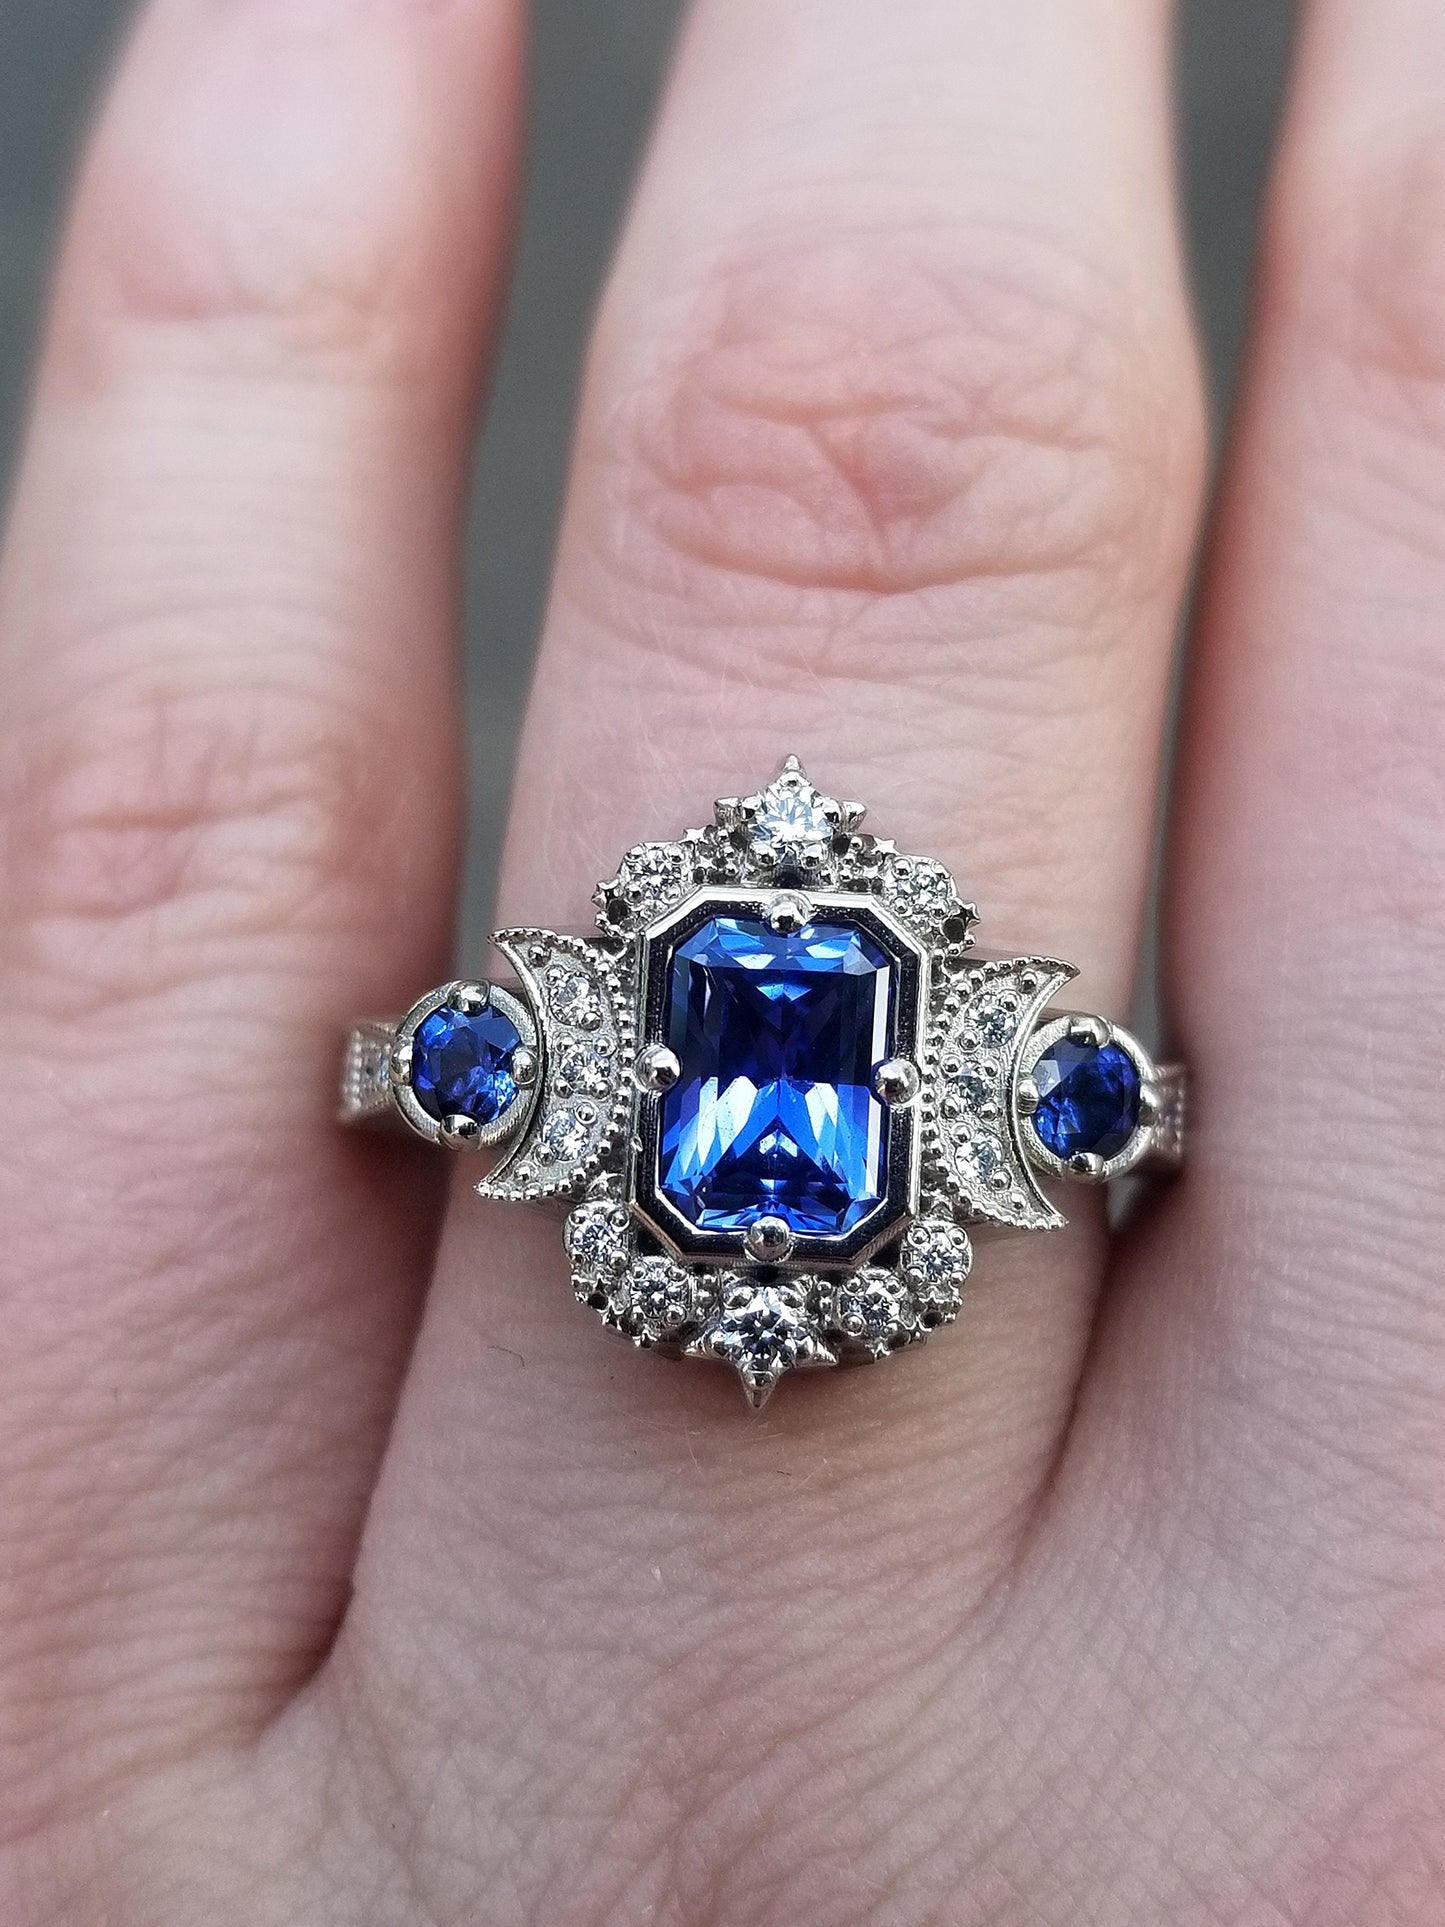 Radiant Blue Sapphire Selene Crescent Moon Engagement Ring - Diamonds and Blue Chatham Sapphires - 14k Palladium White Gold